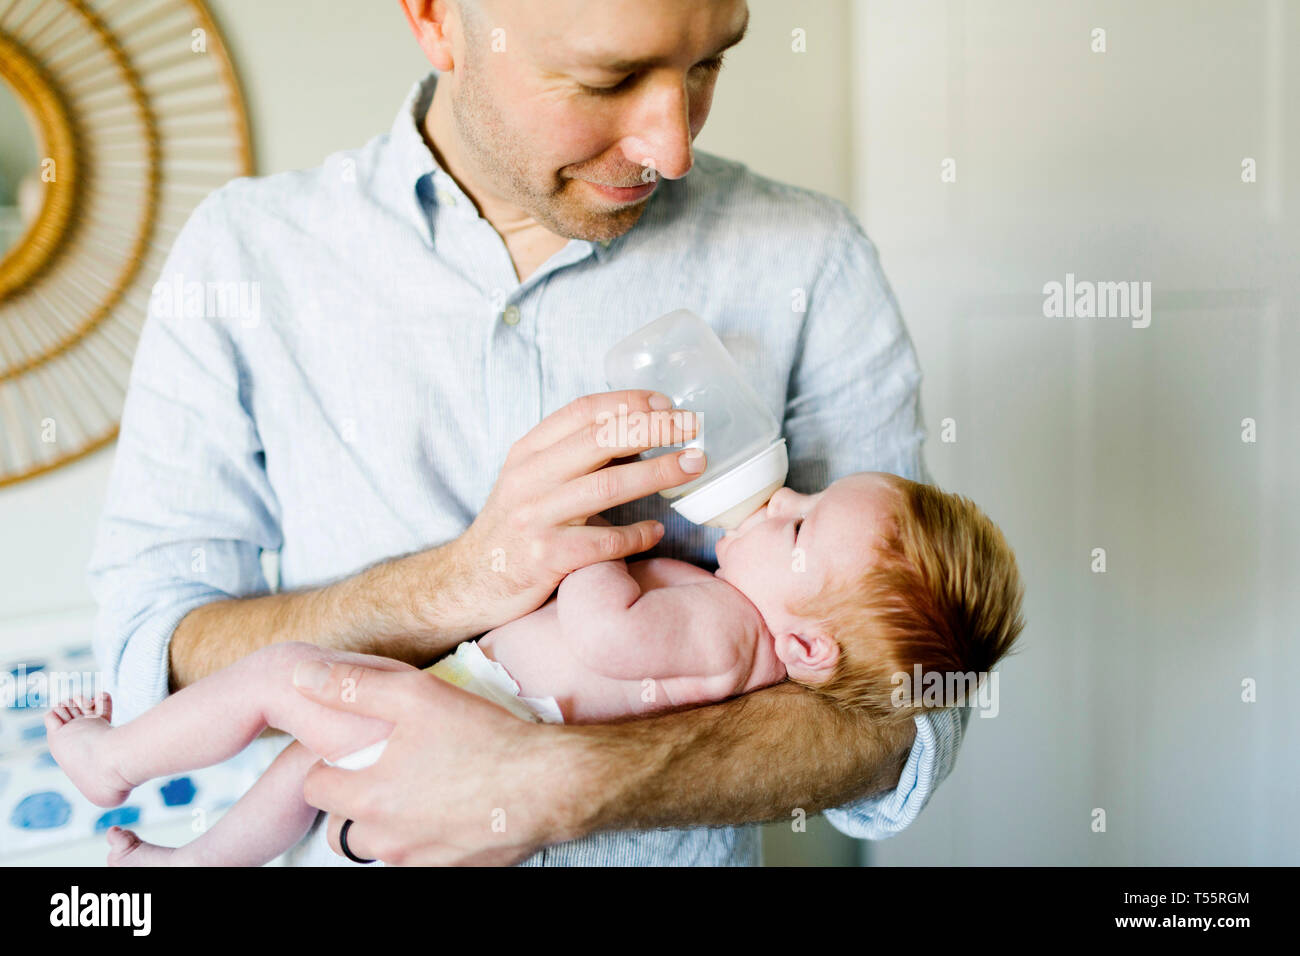 Man feeding his baby son Stock Photo